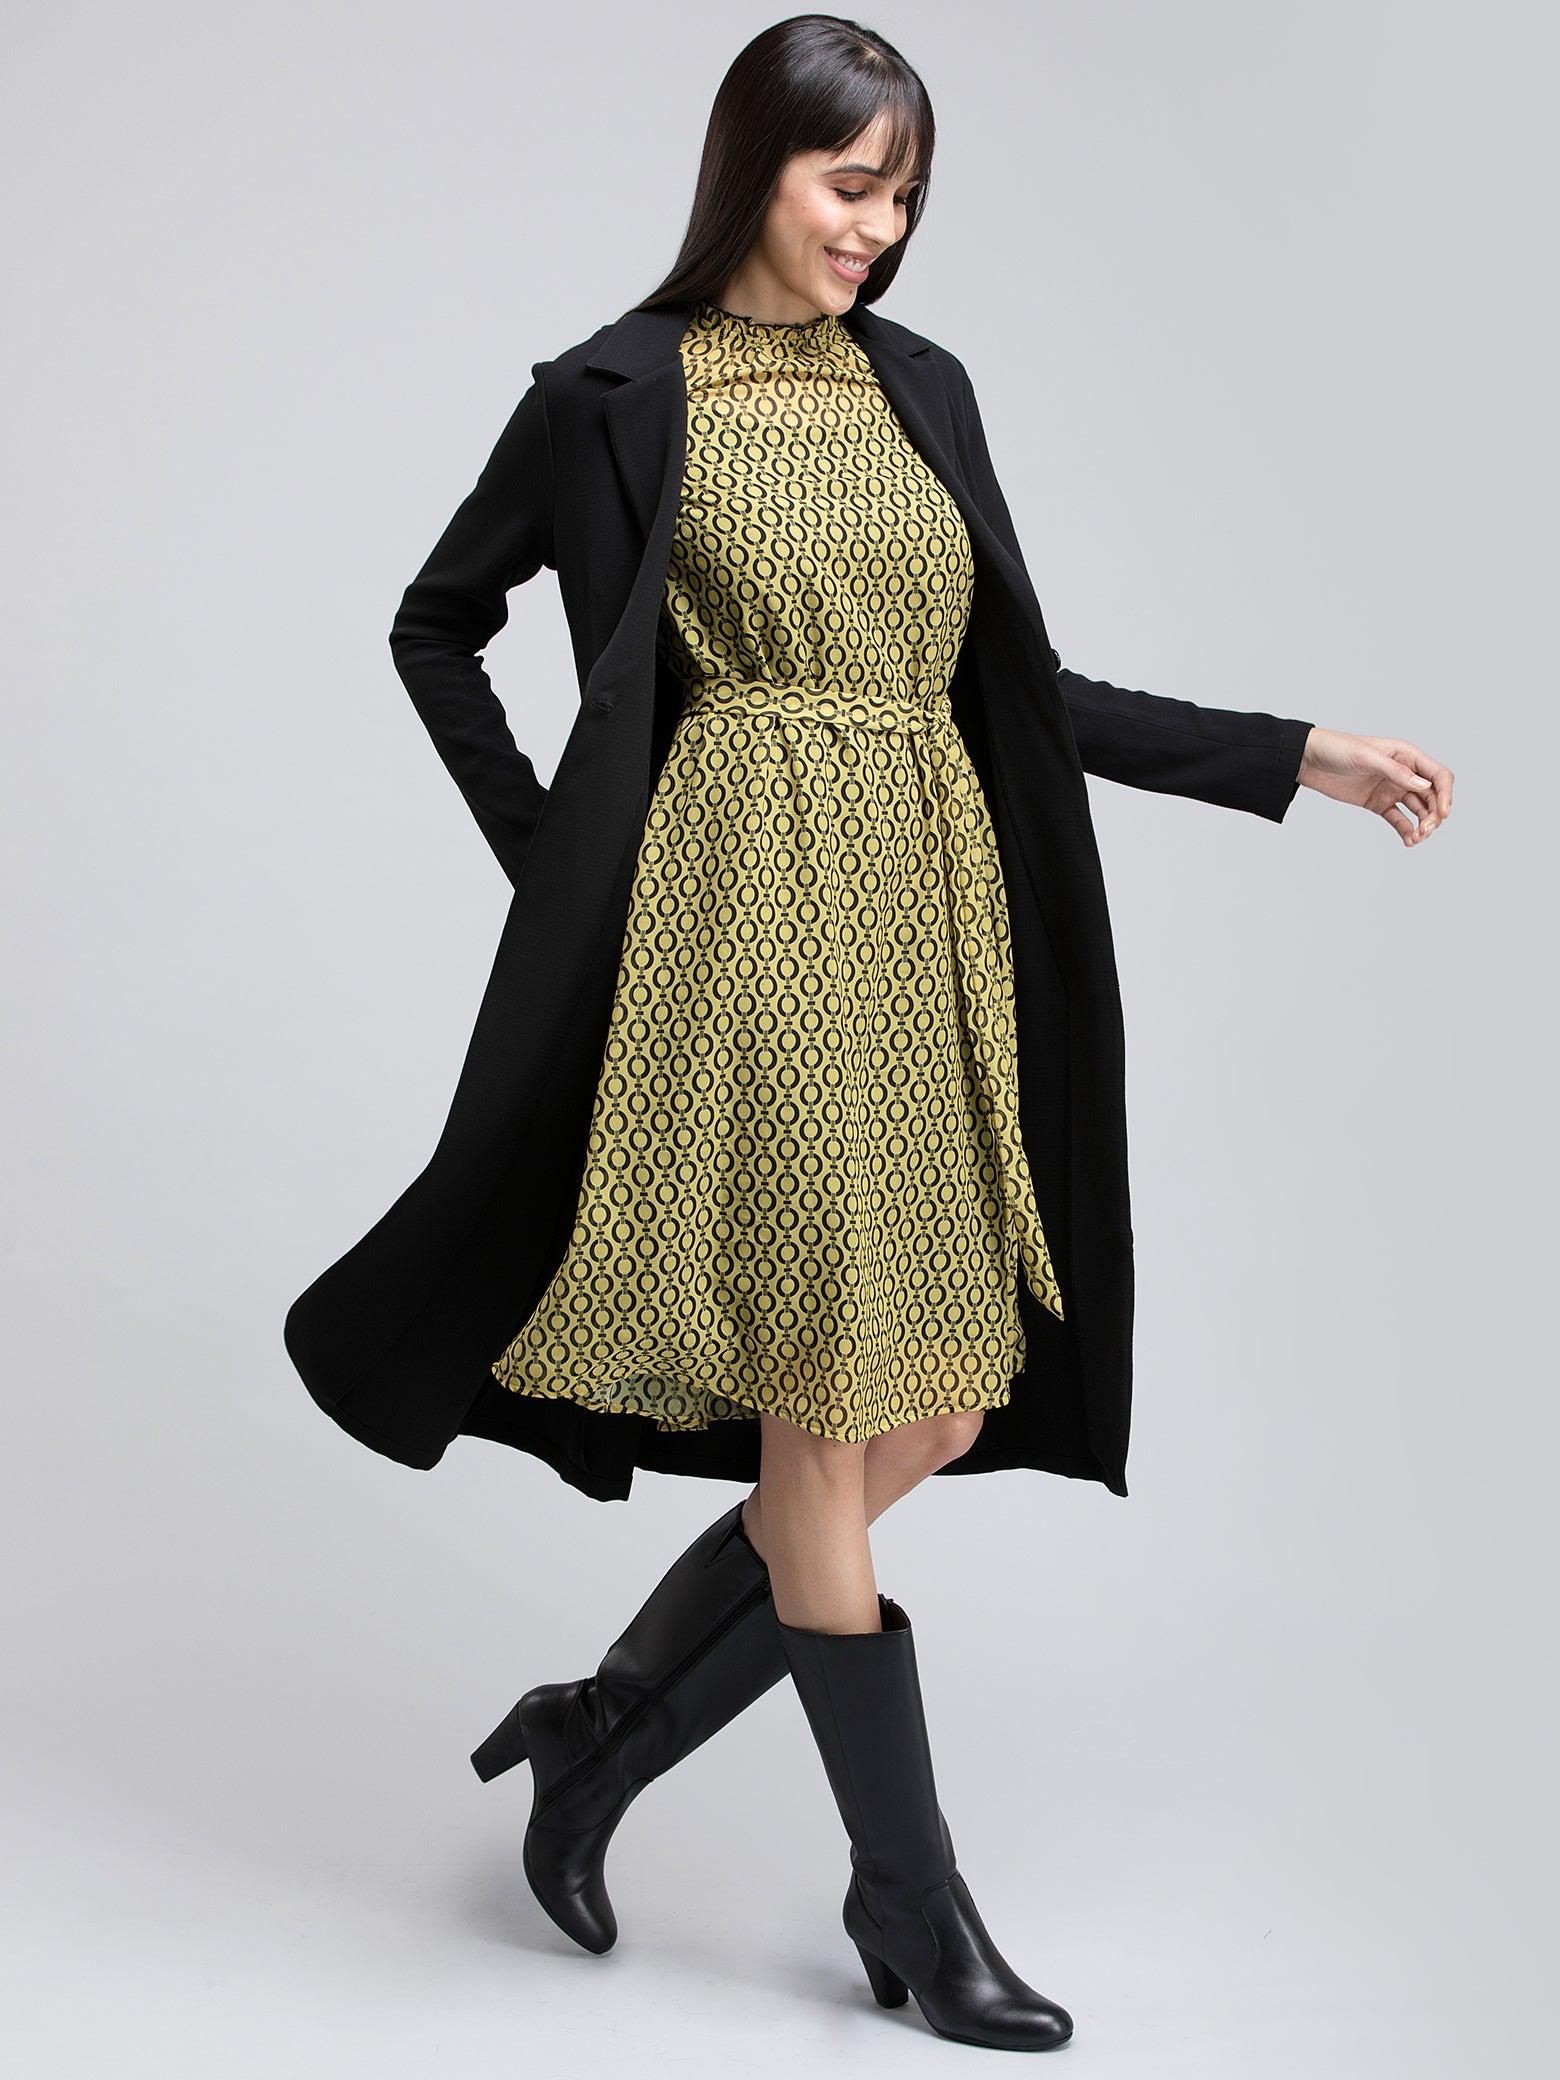 Geometric Print Ruffled A Line Dress - Yellow and Black| Formal Dresses